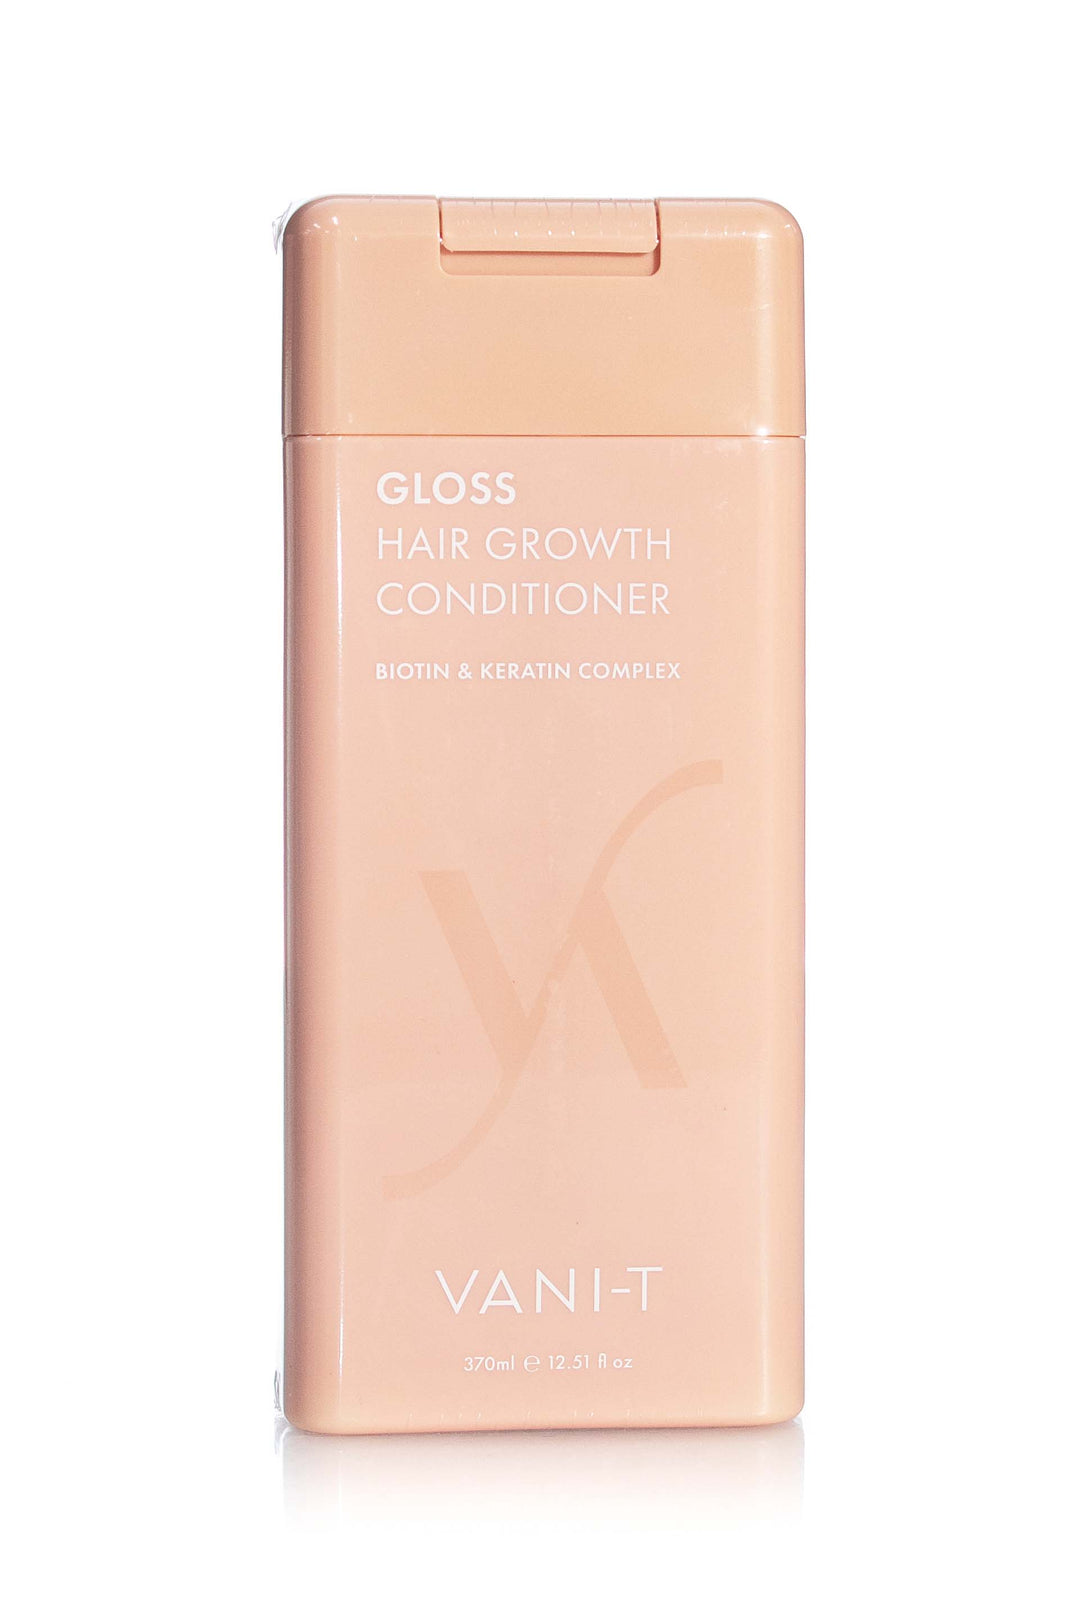 VANI-T GLOSS HAIR GROWTH CONDITIONER 370ML